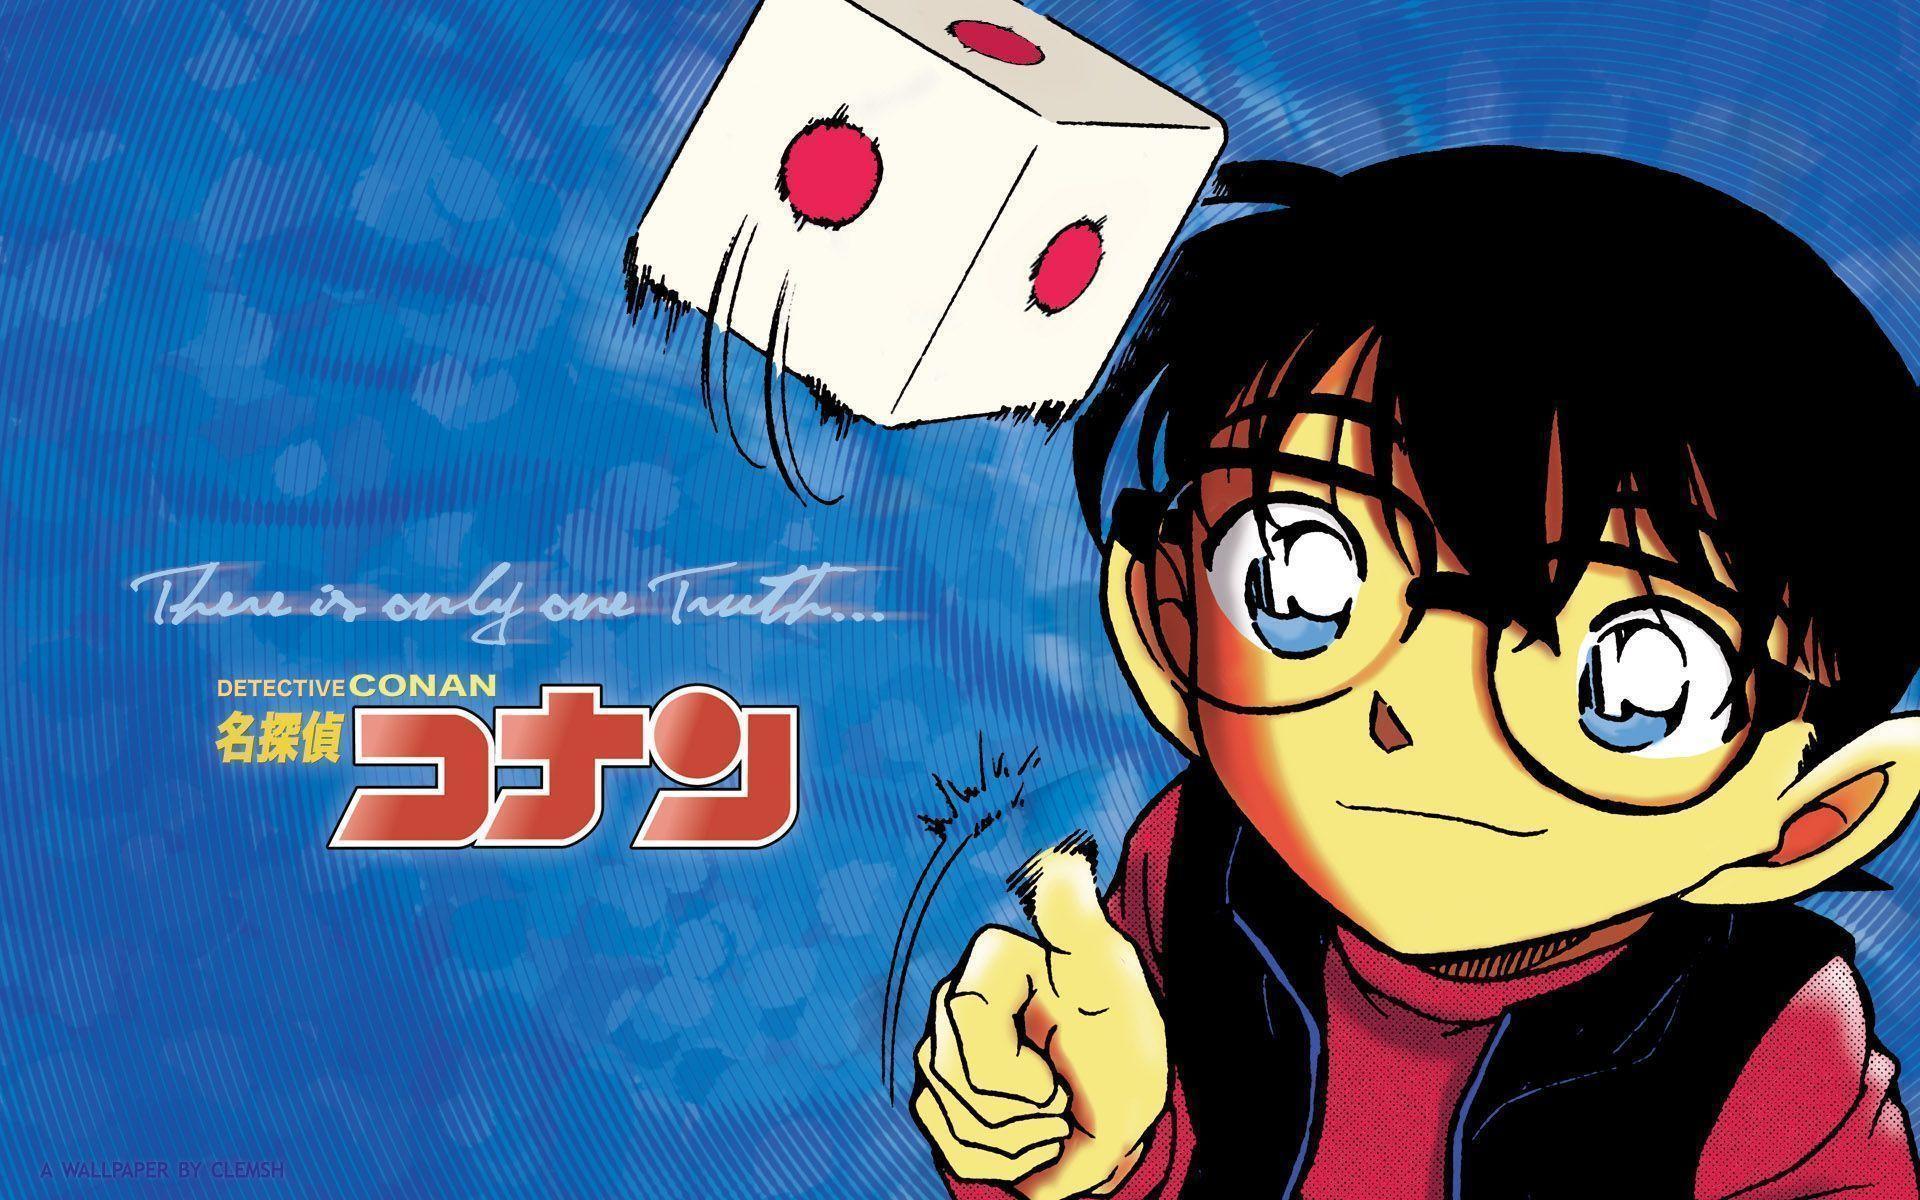 Wallpaper of Detective Conan in HD TV anime series